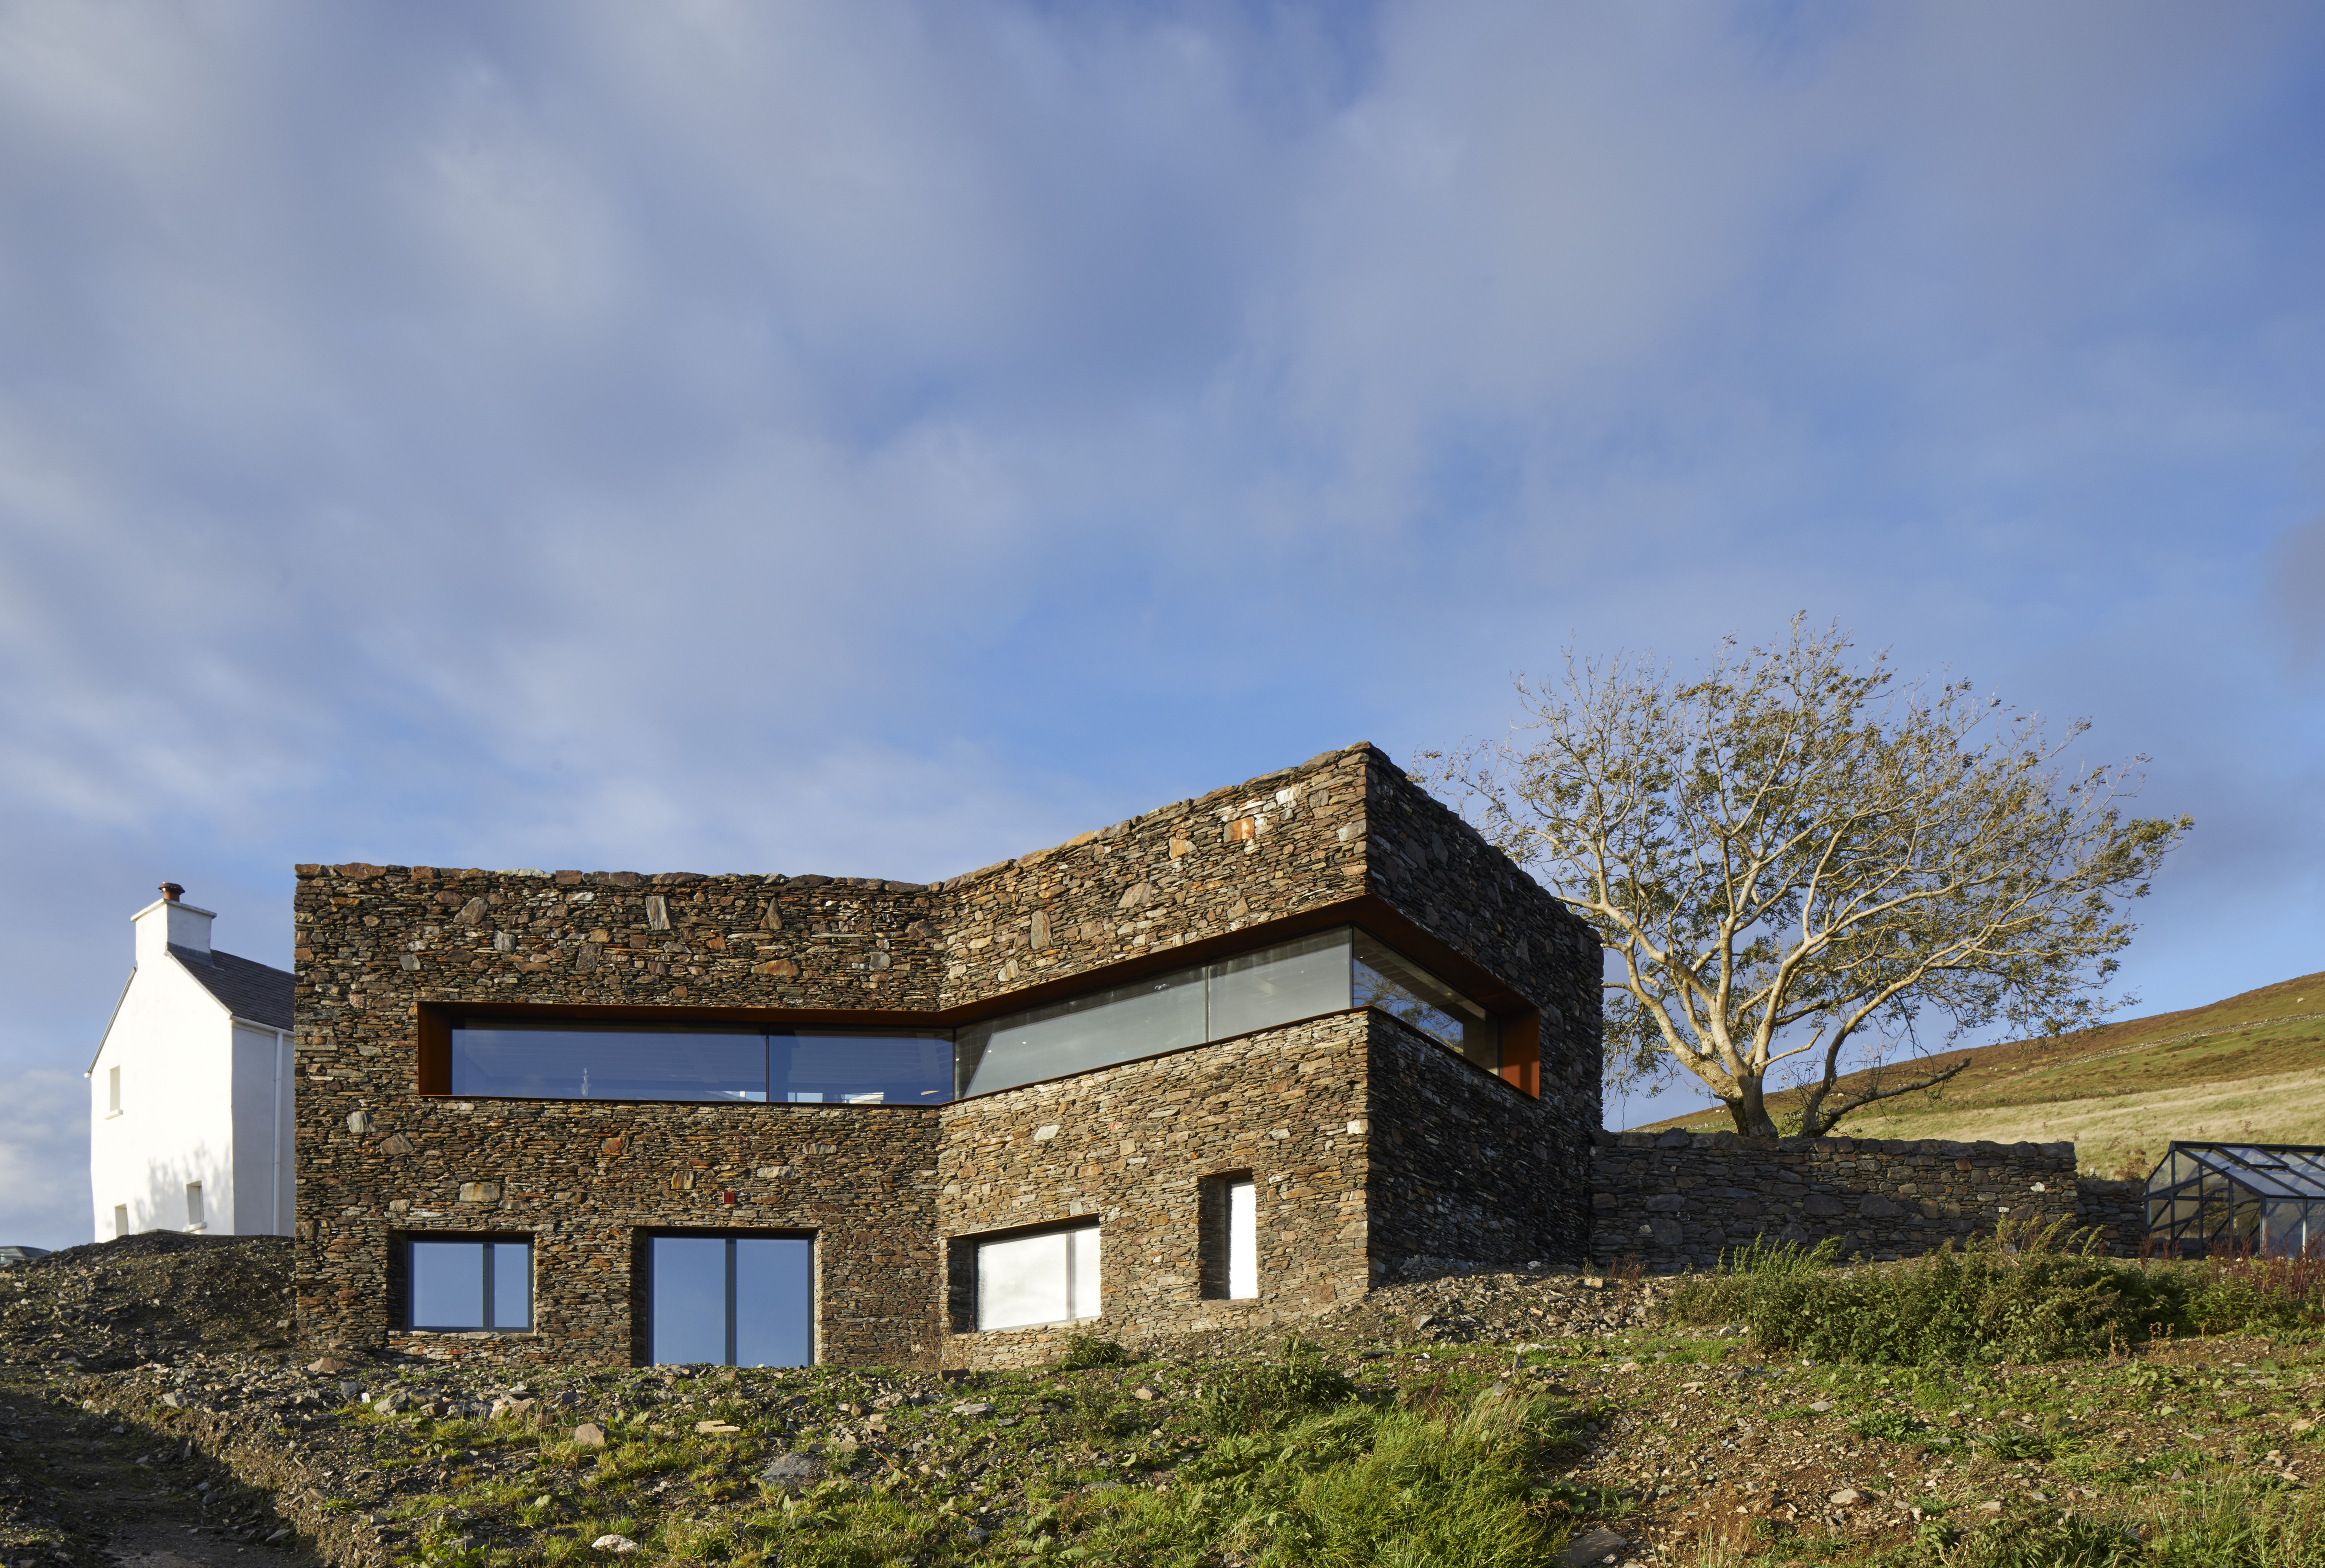 Minimalist Modern: The Architecture of Rural Retreats